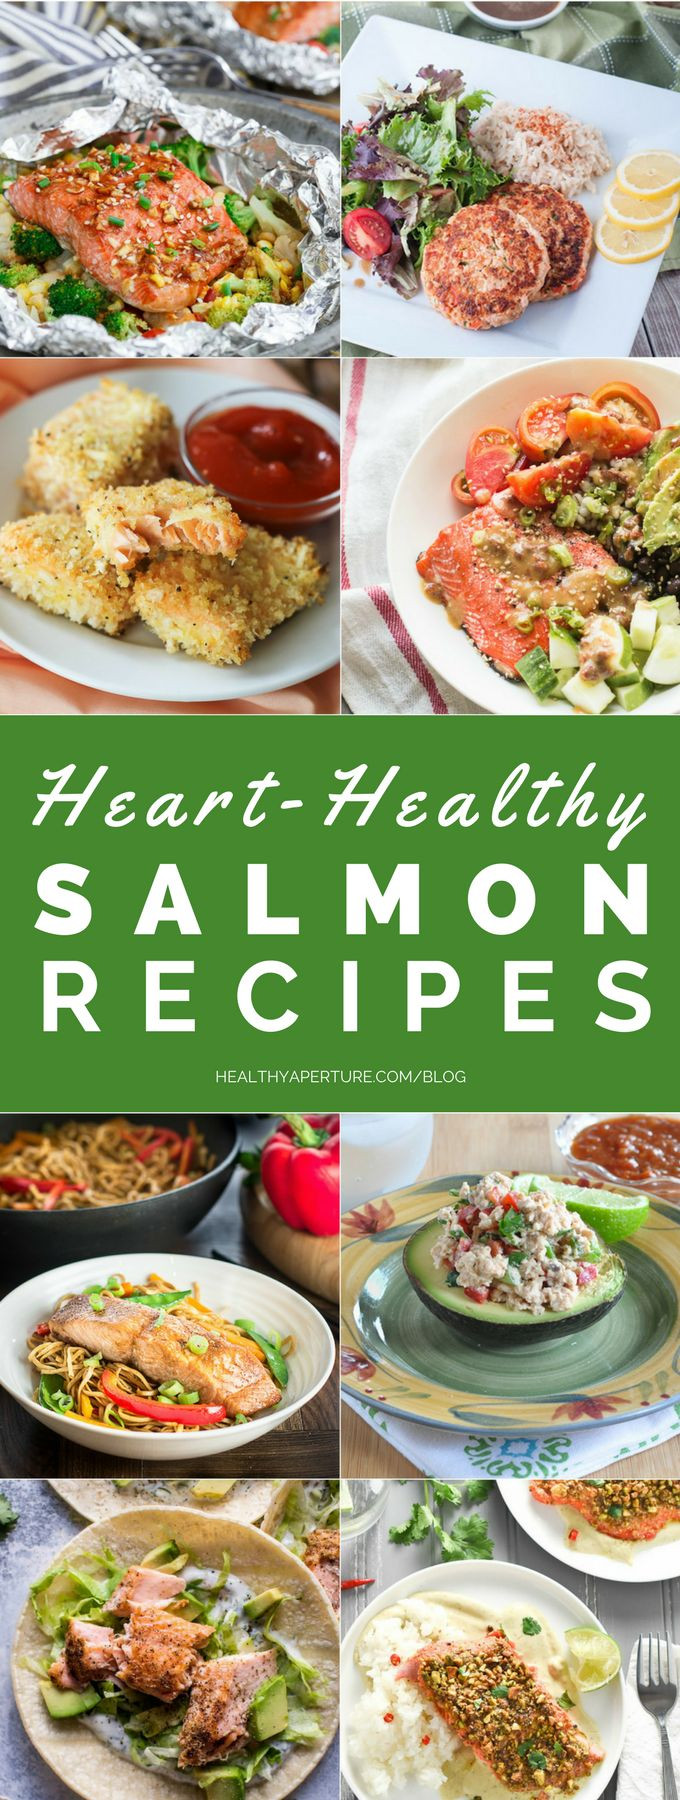 Heart Healthy Dinner
 The 25 best Heart healthy recipes ideas on Pinterest